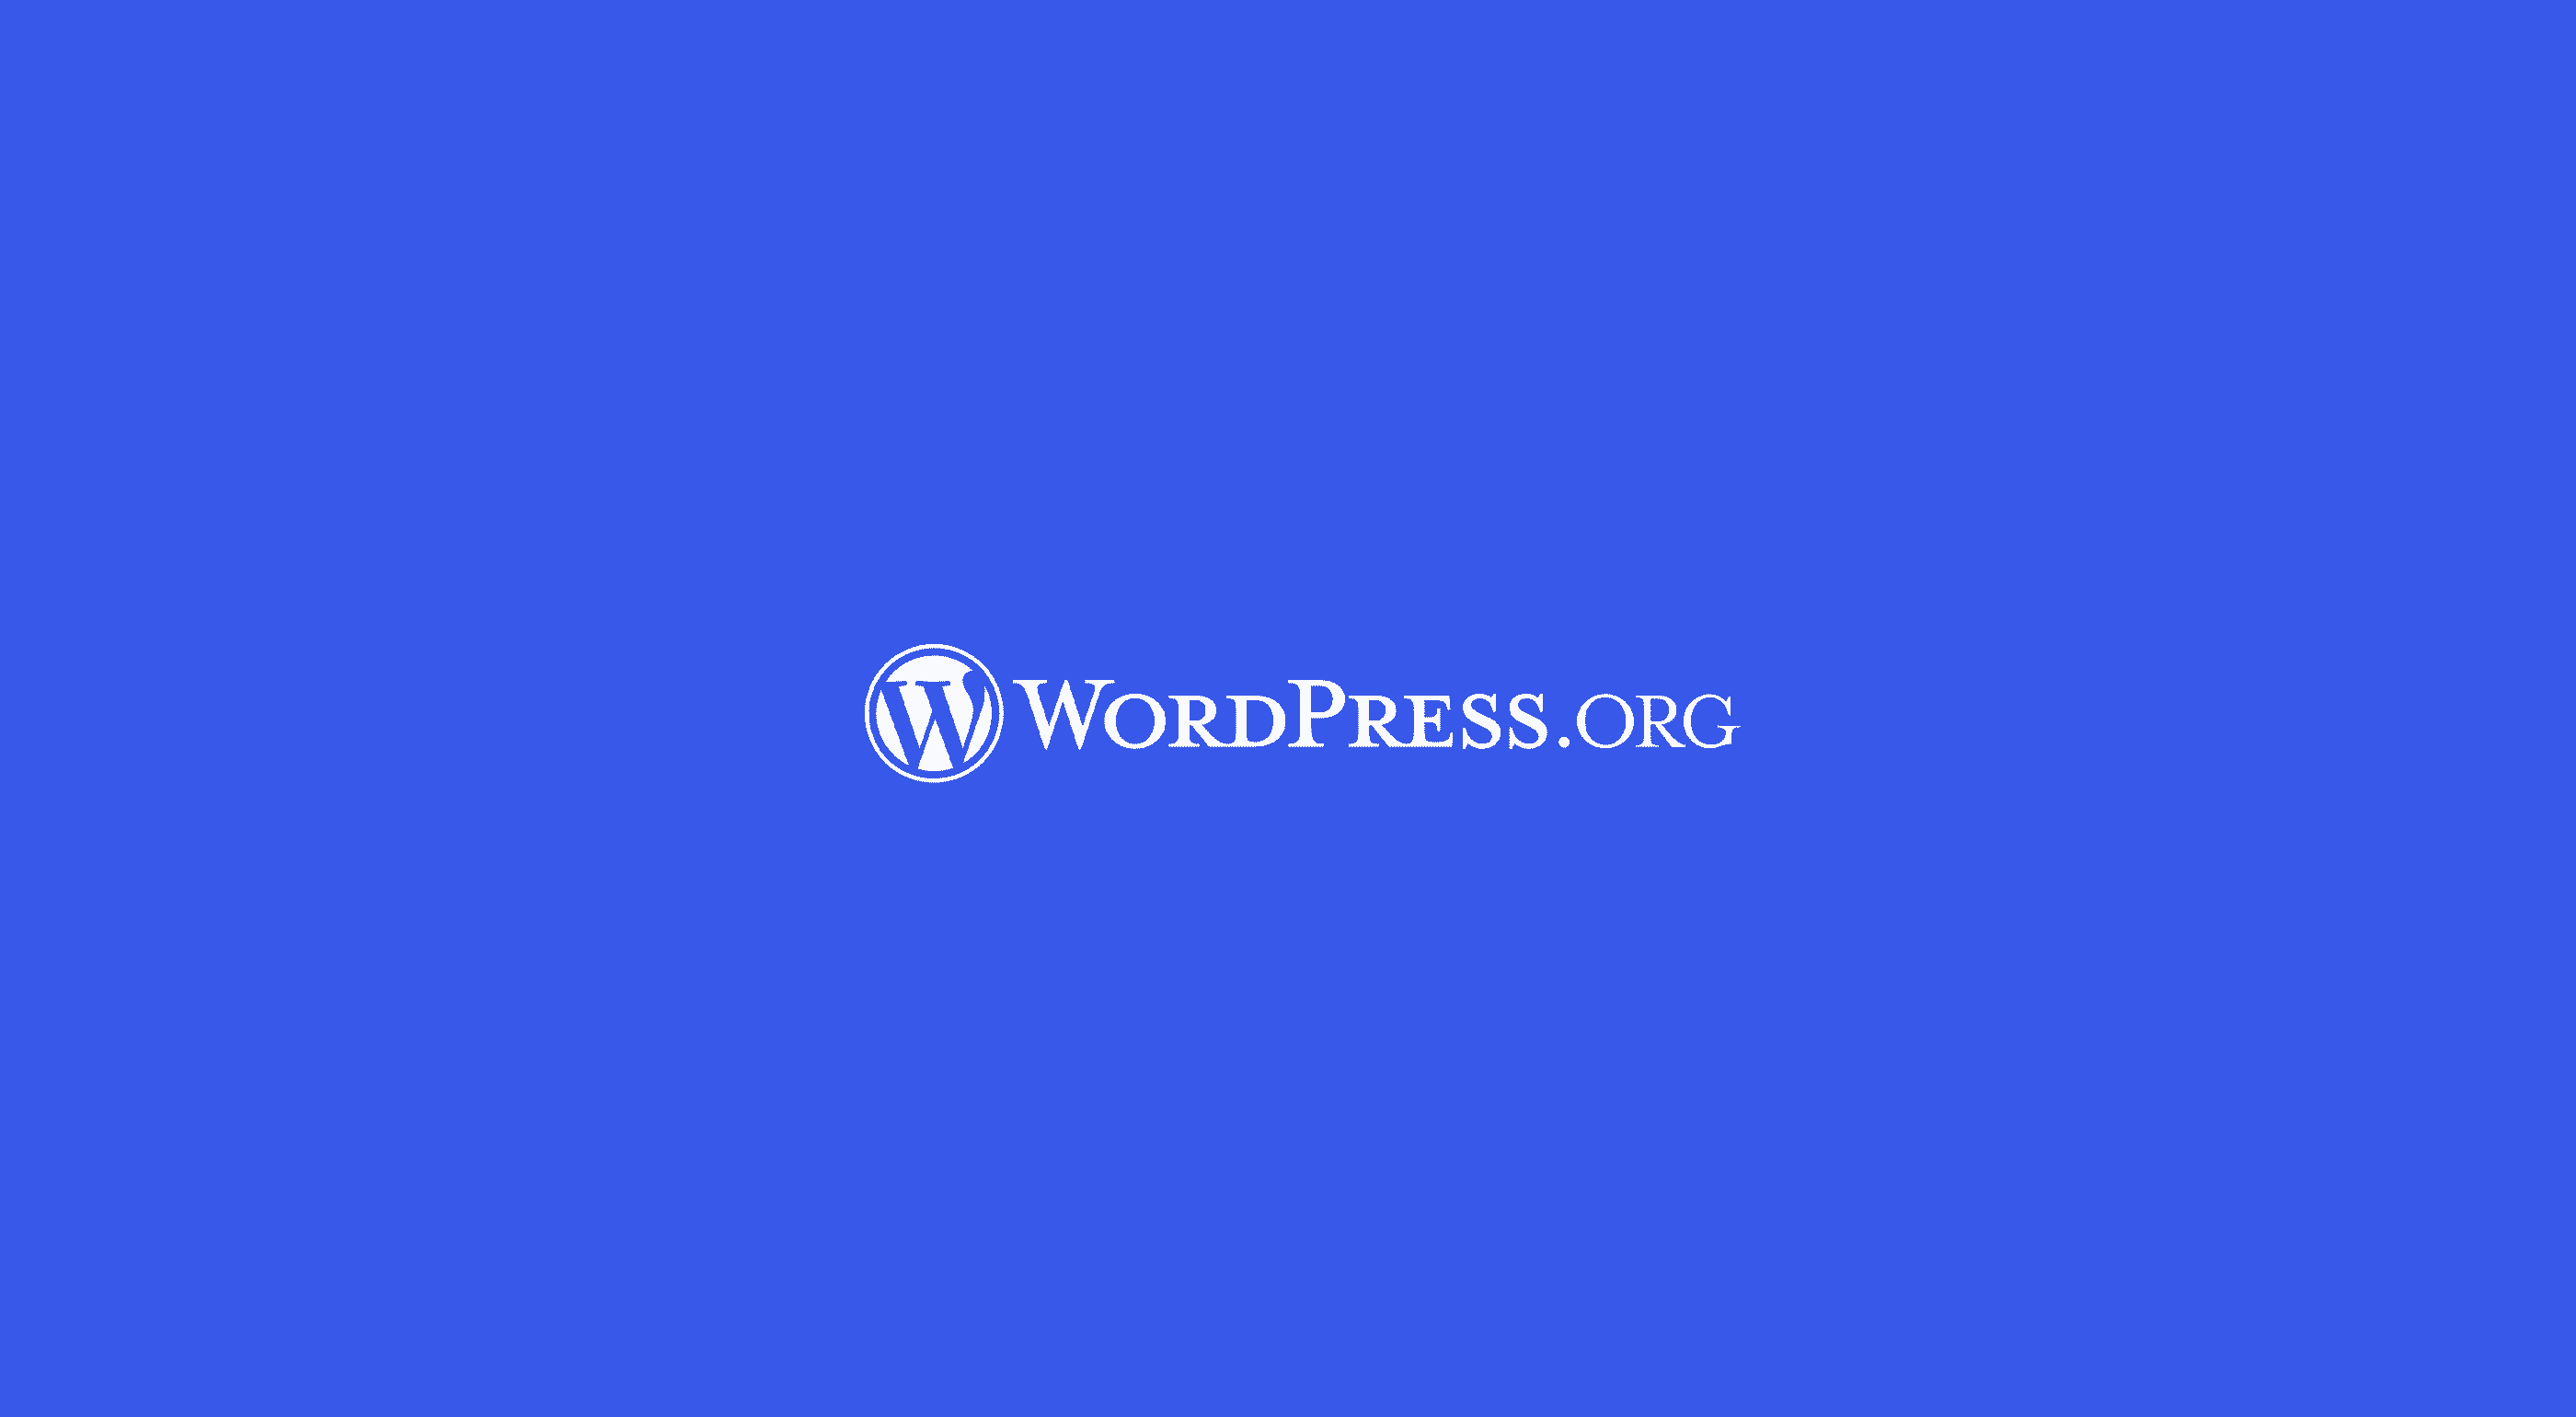 WordPress.org 插件作者账号被爆有密码泄露撞库风险，请立即修改密码。